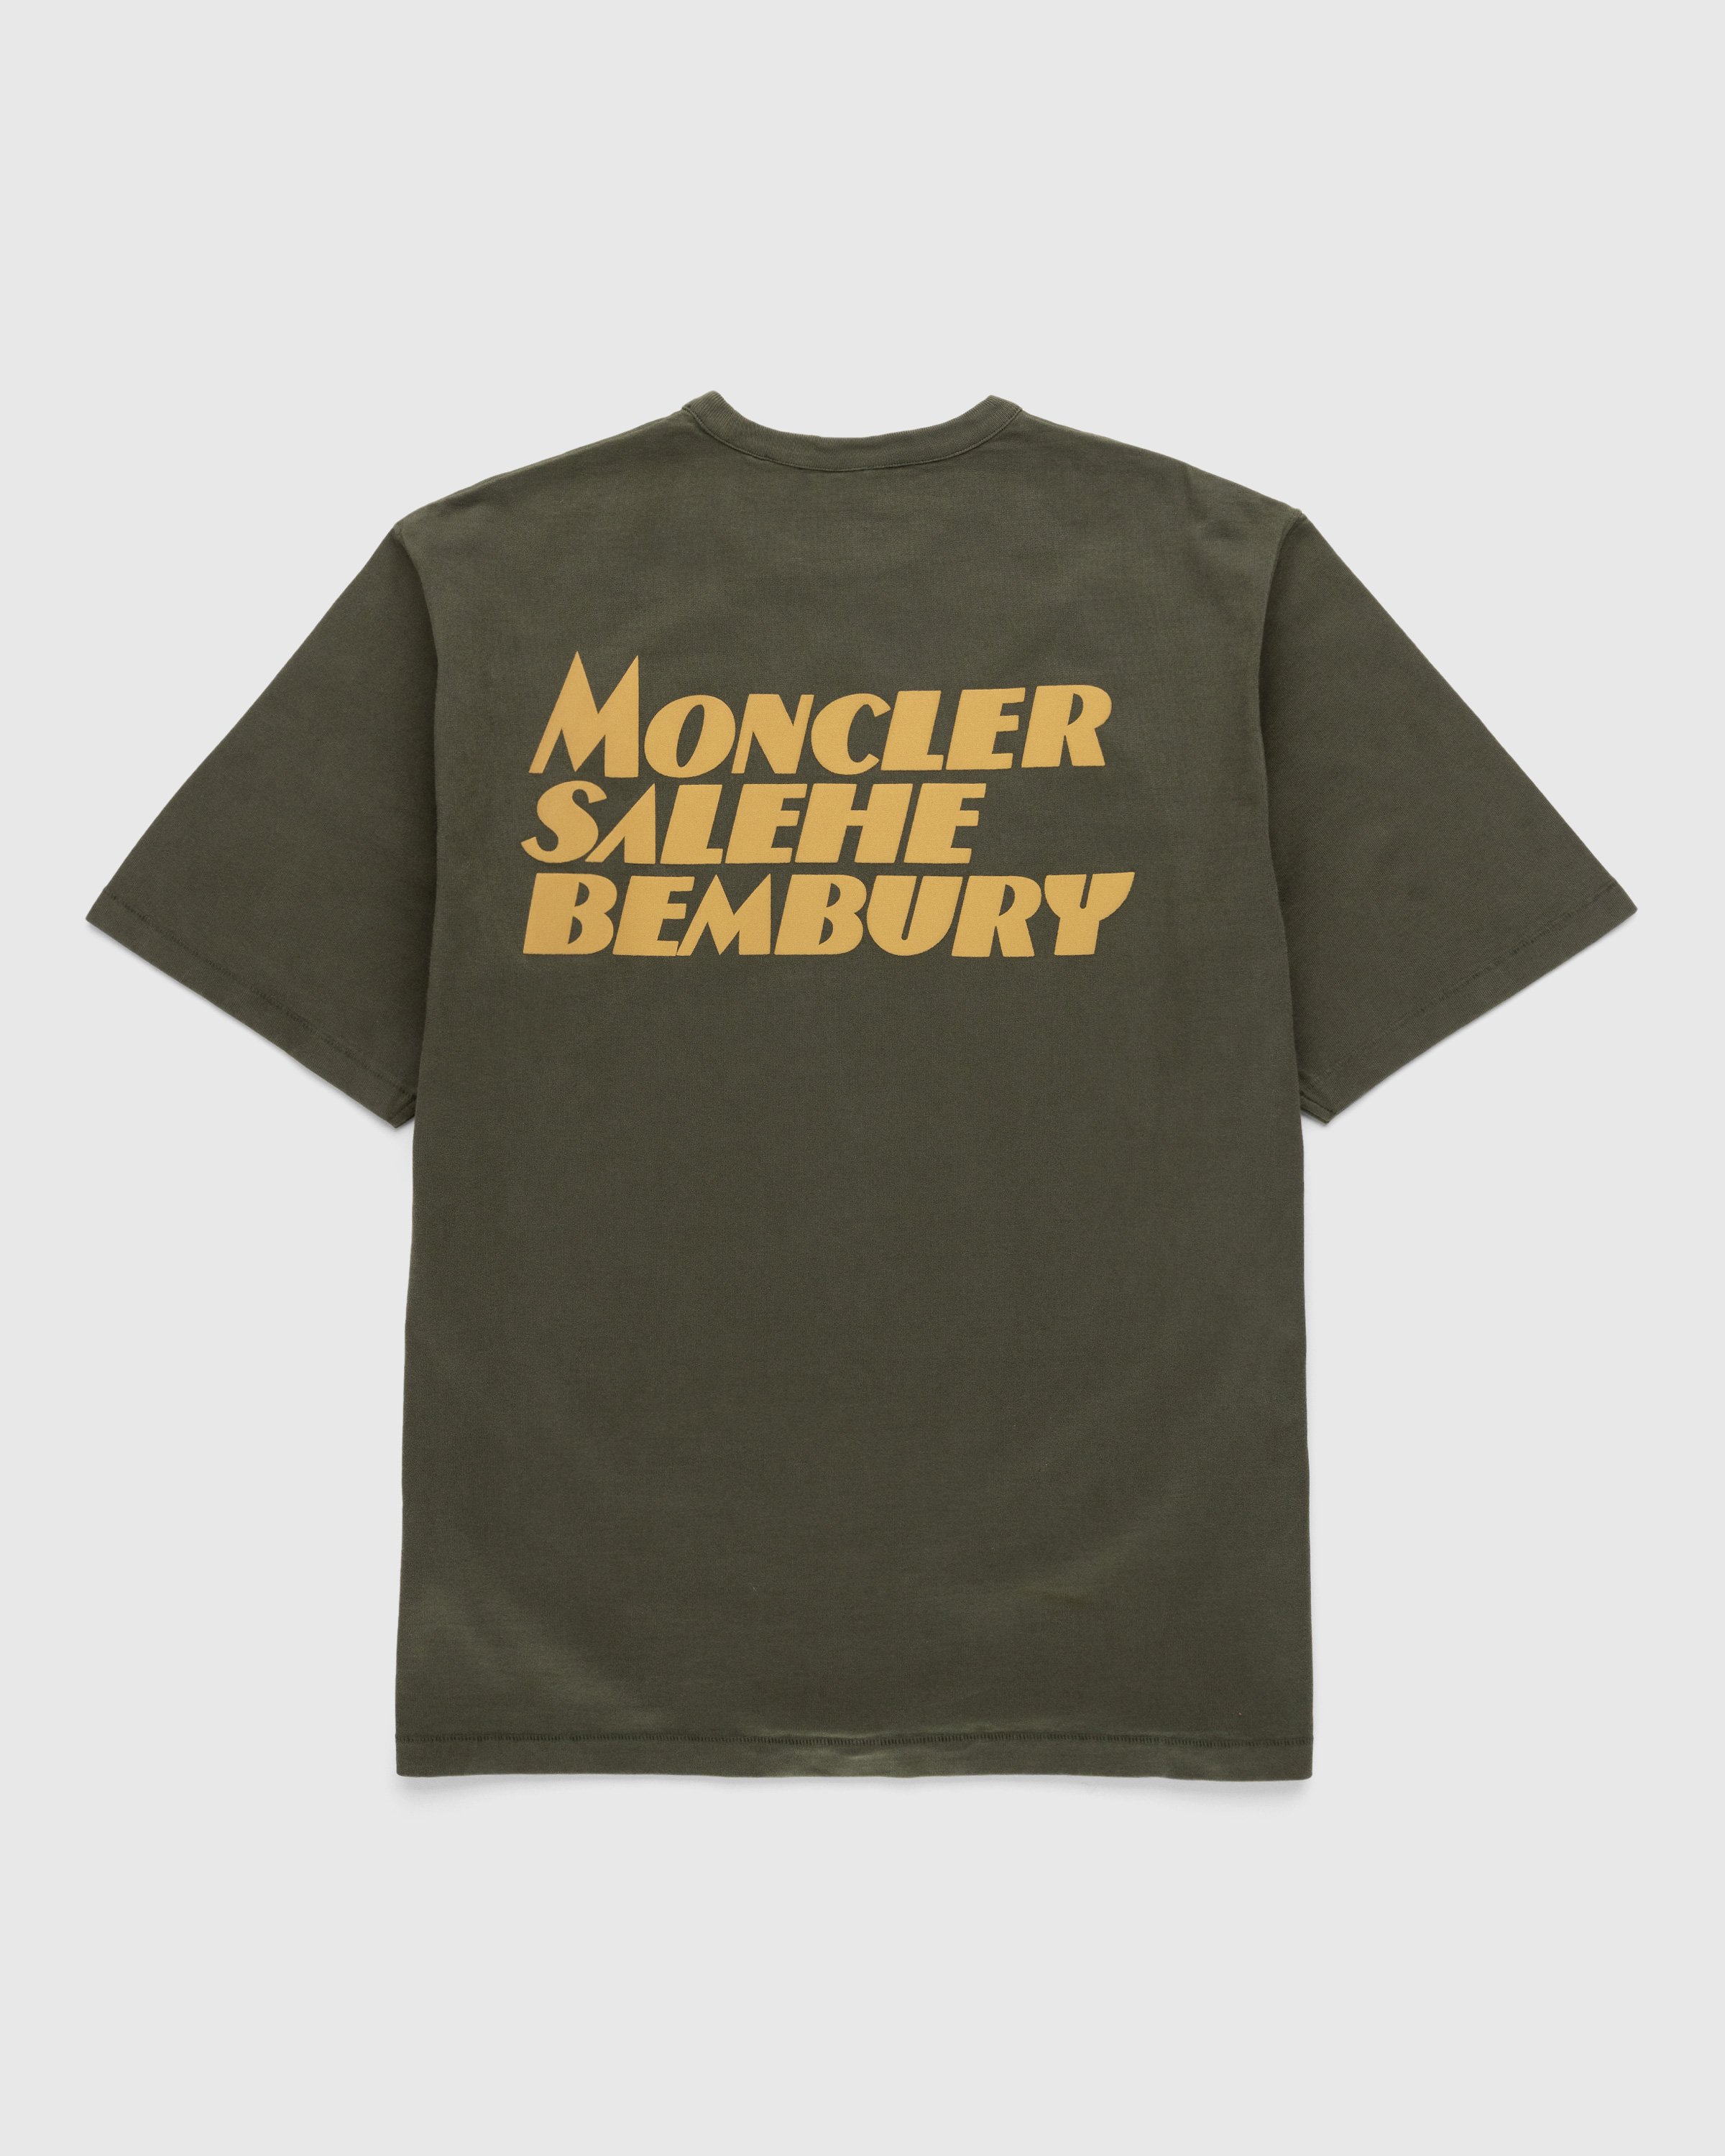 Moncler x Salehe Bembury - Logo T-Shirt Green - Clothing - Green - Image 1